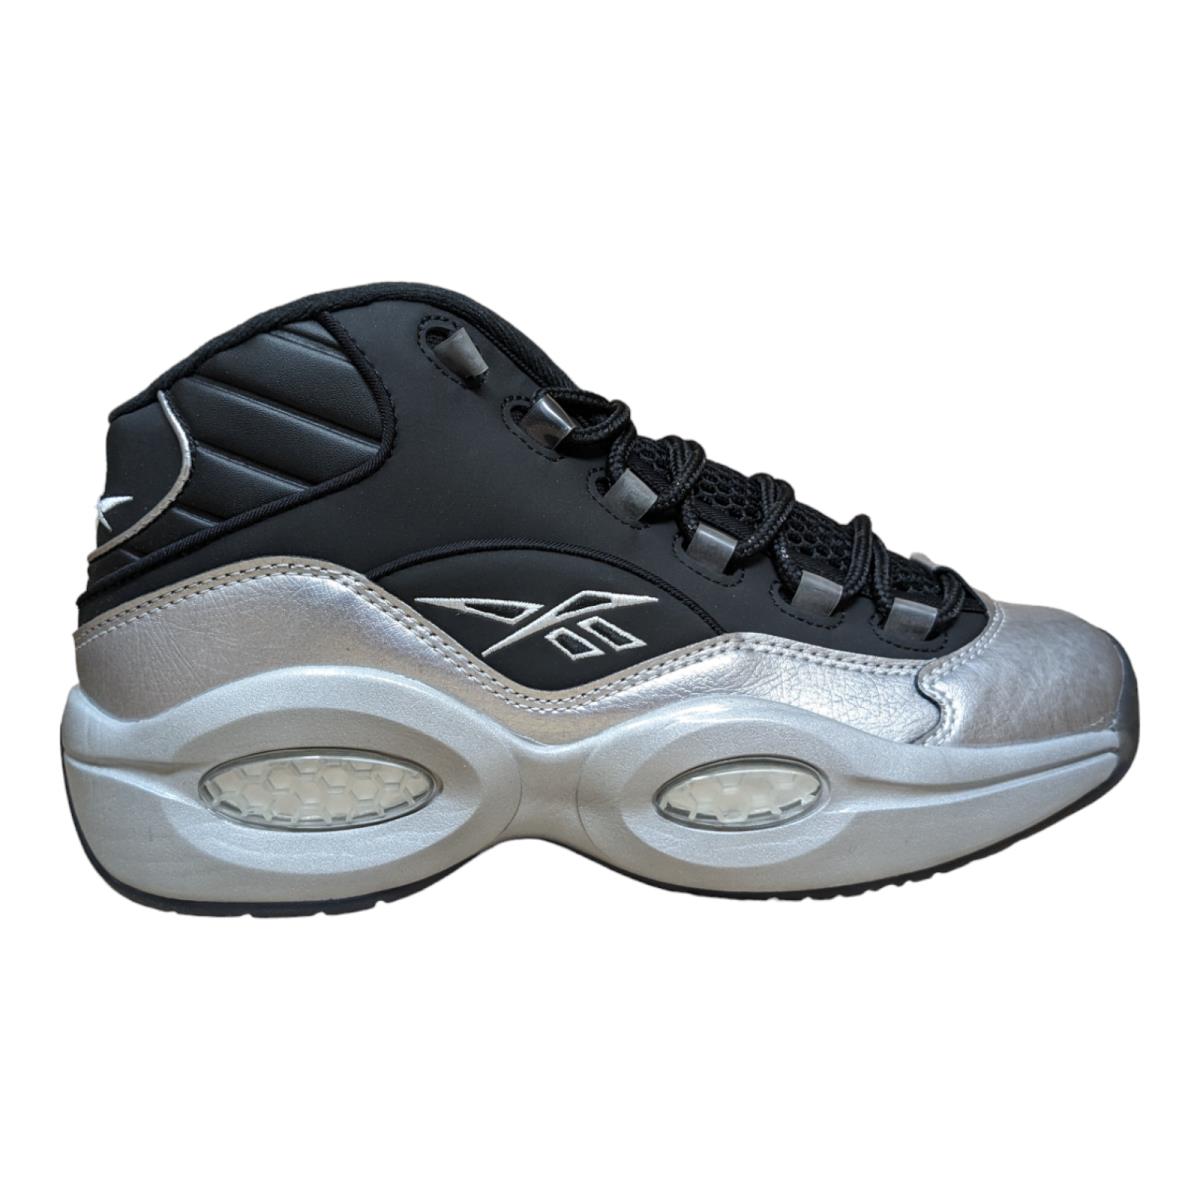 Reebok Men`s Question Mid Basketball Shoe - US Shoe Size 8.5 Black - GX7925 - Black